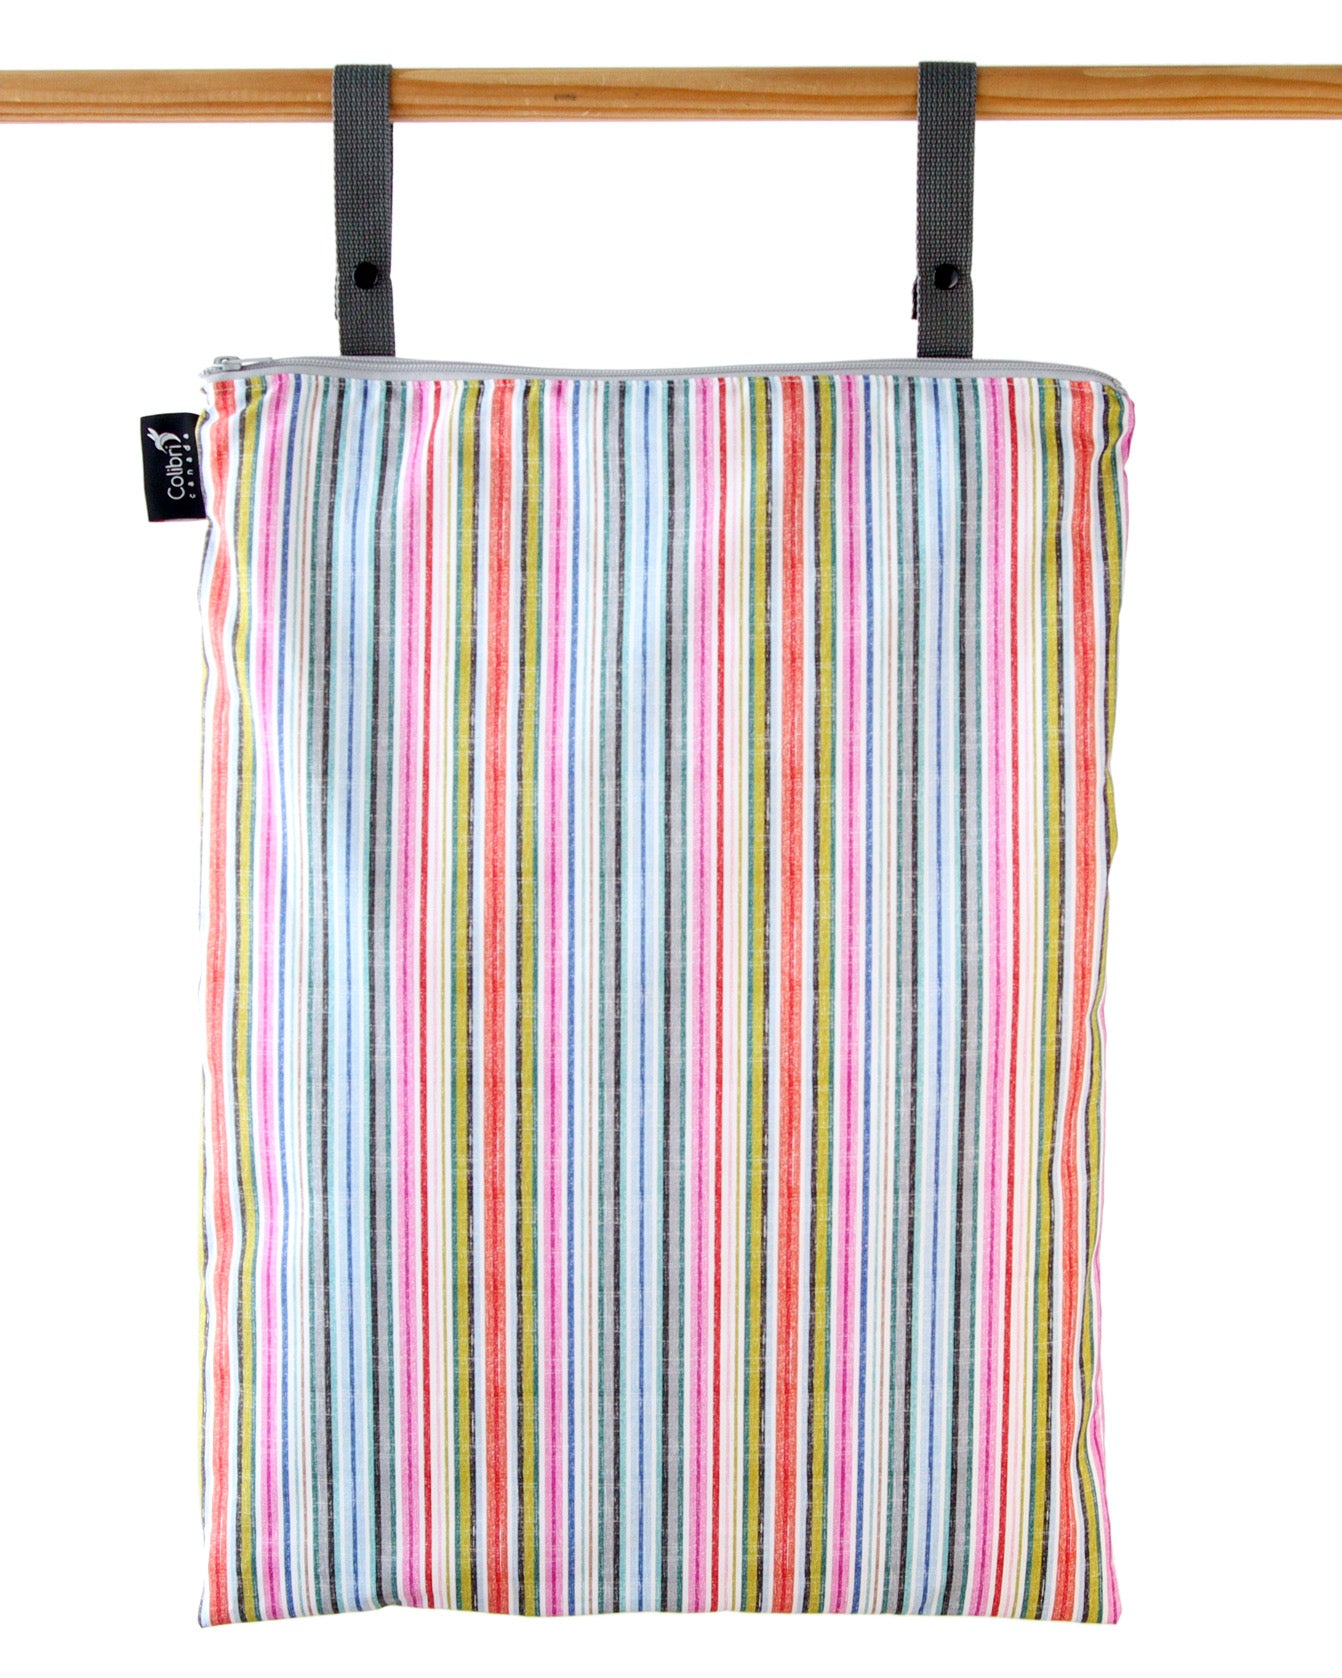 XL Colibri Summer Stripes Wet Bag